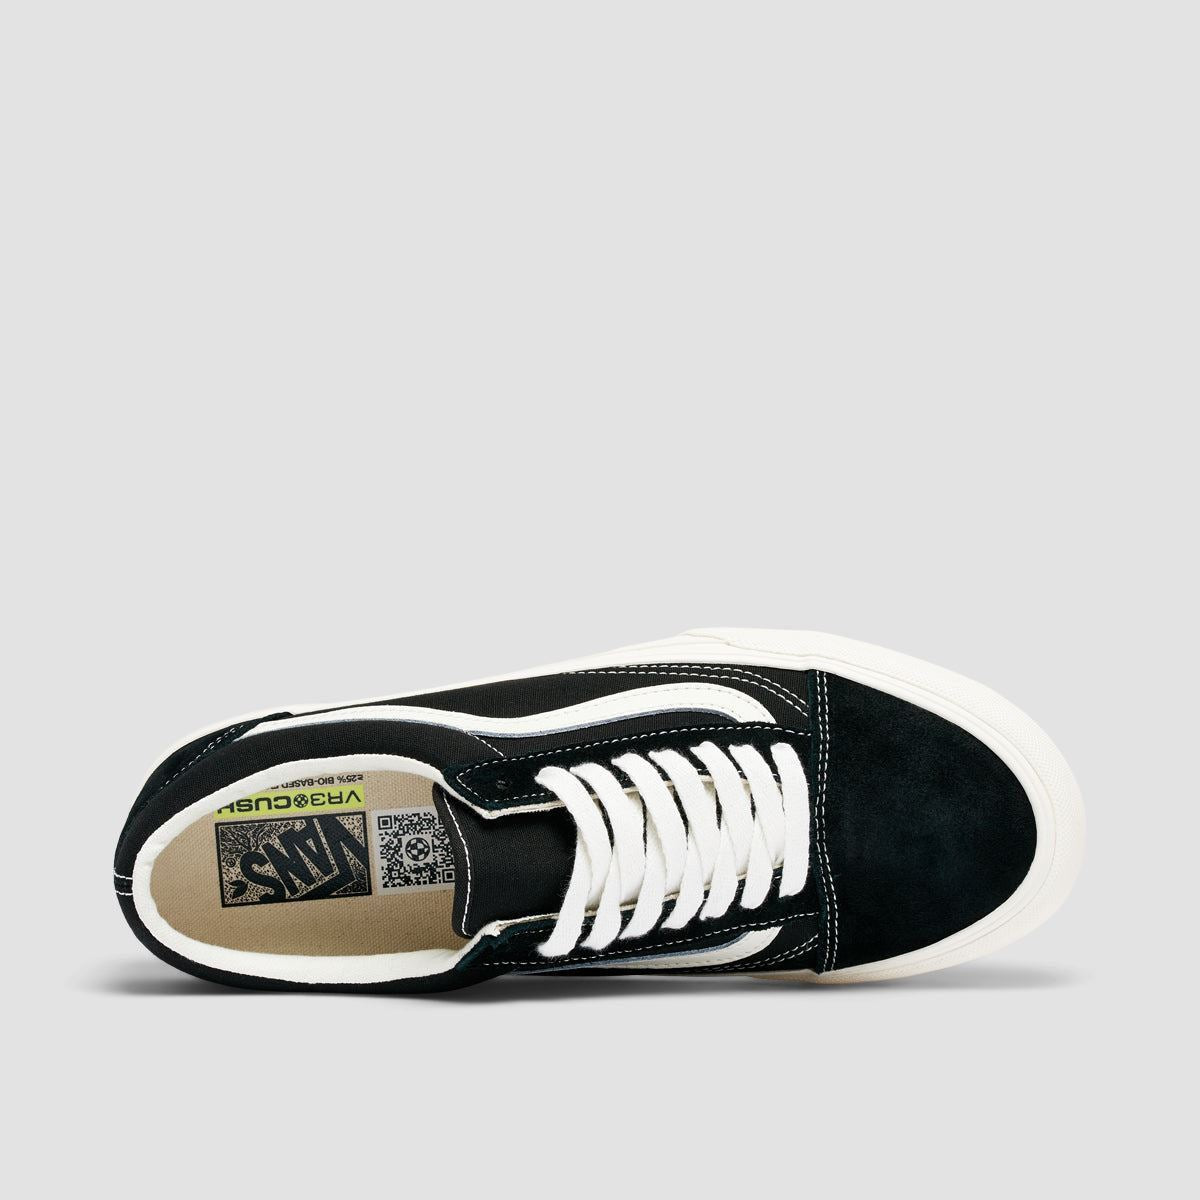 Vans Old Skool VR3 Shoes - Black/Marshmallow